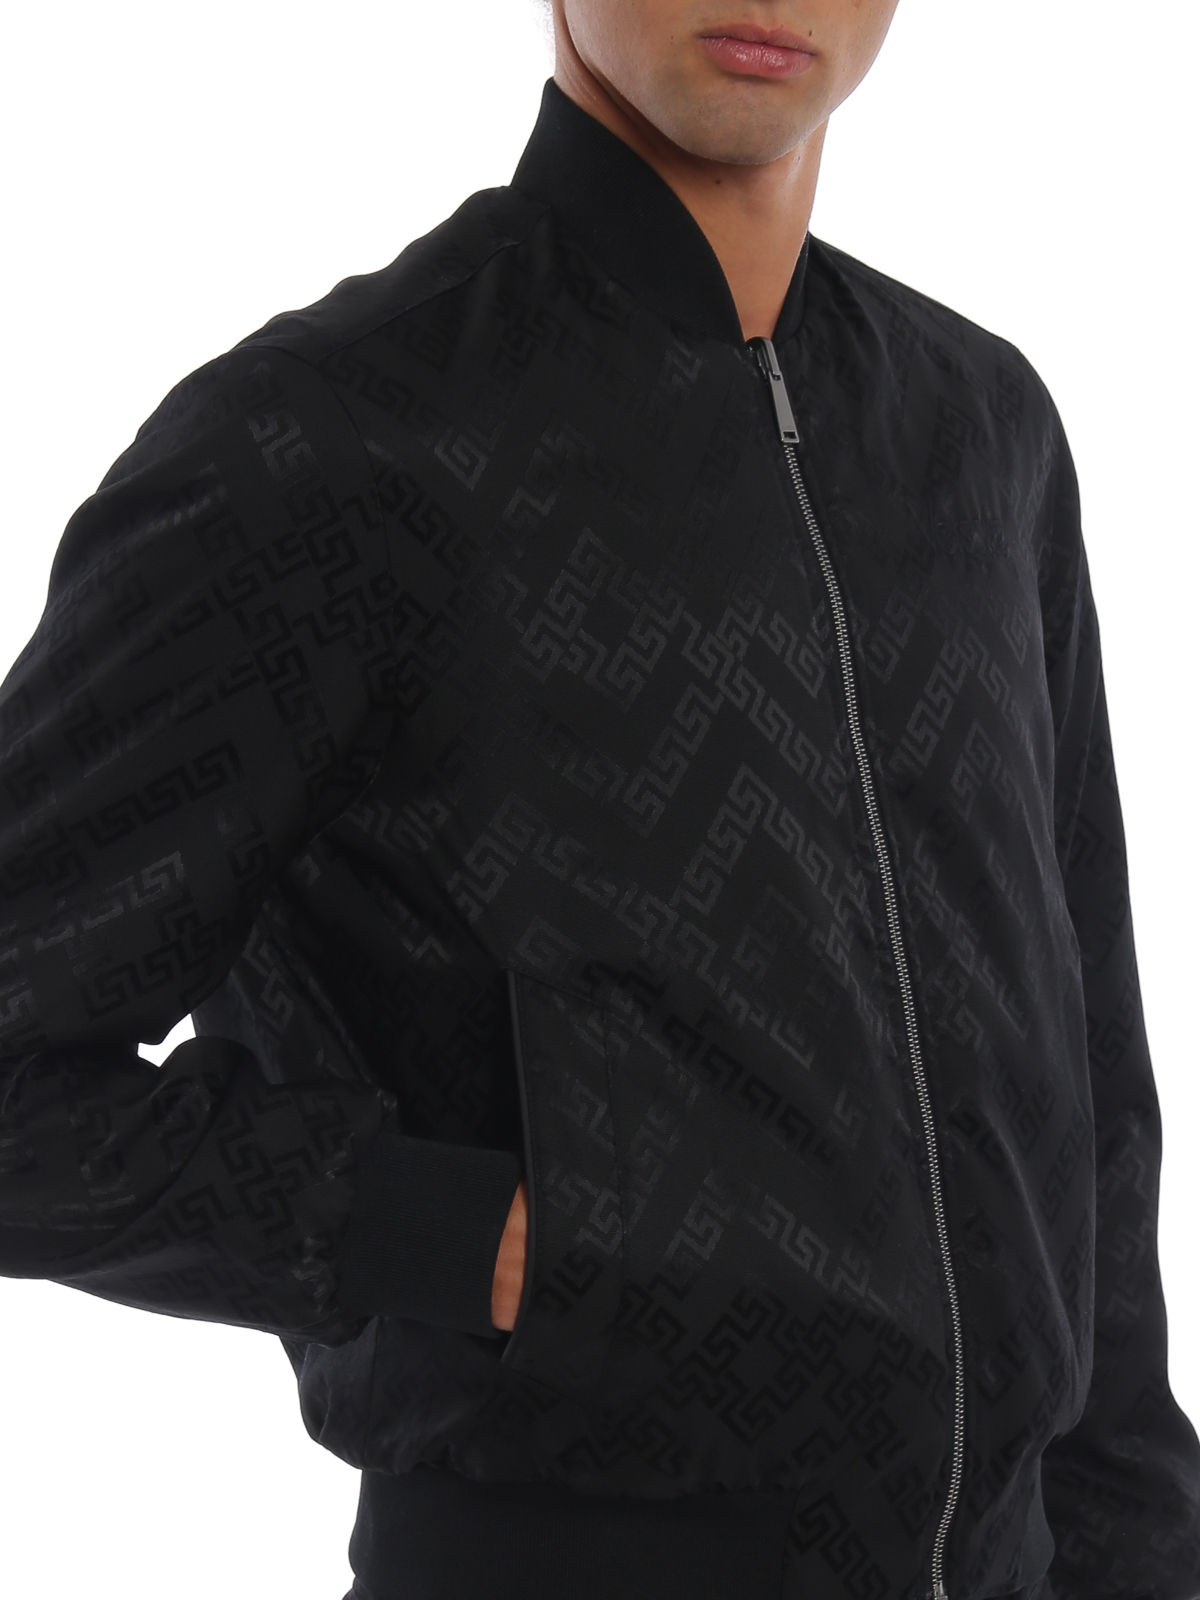 versace black bomber jacket